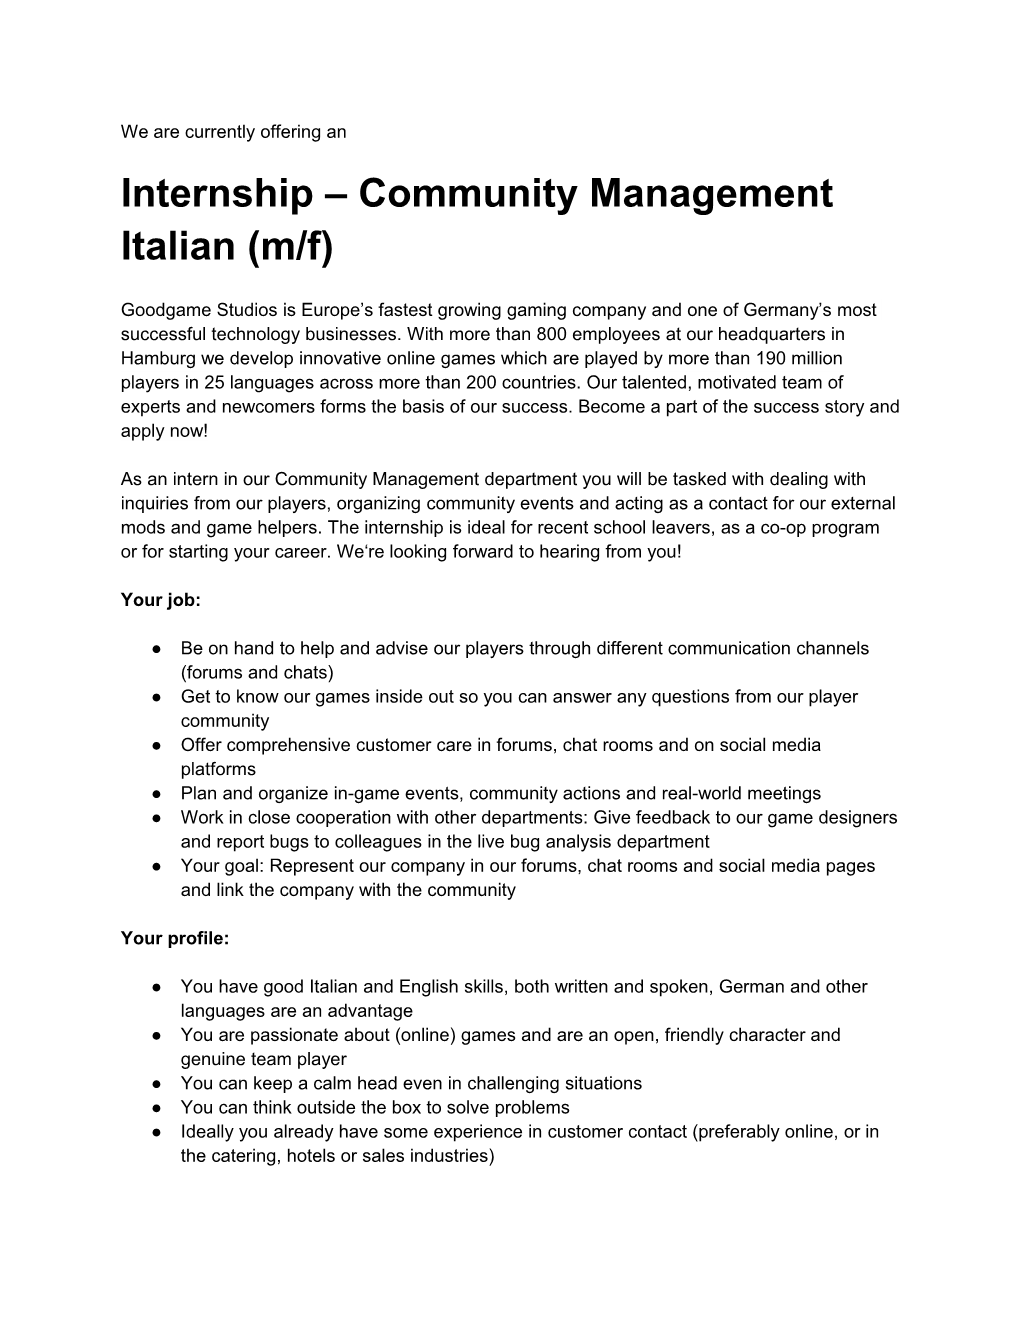 Internship - Community Management Italian